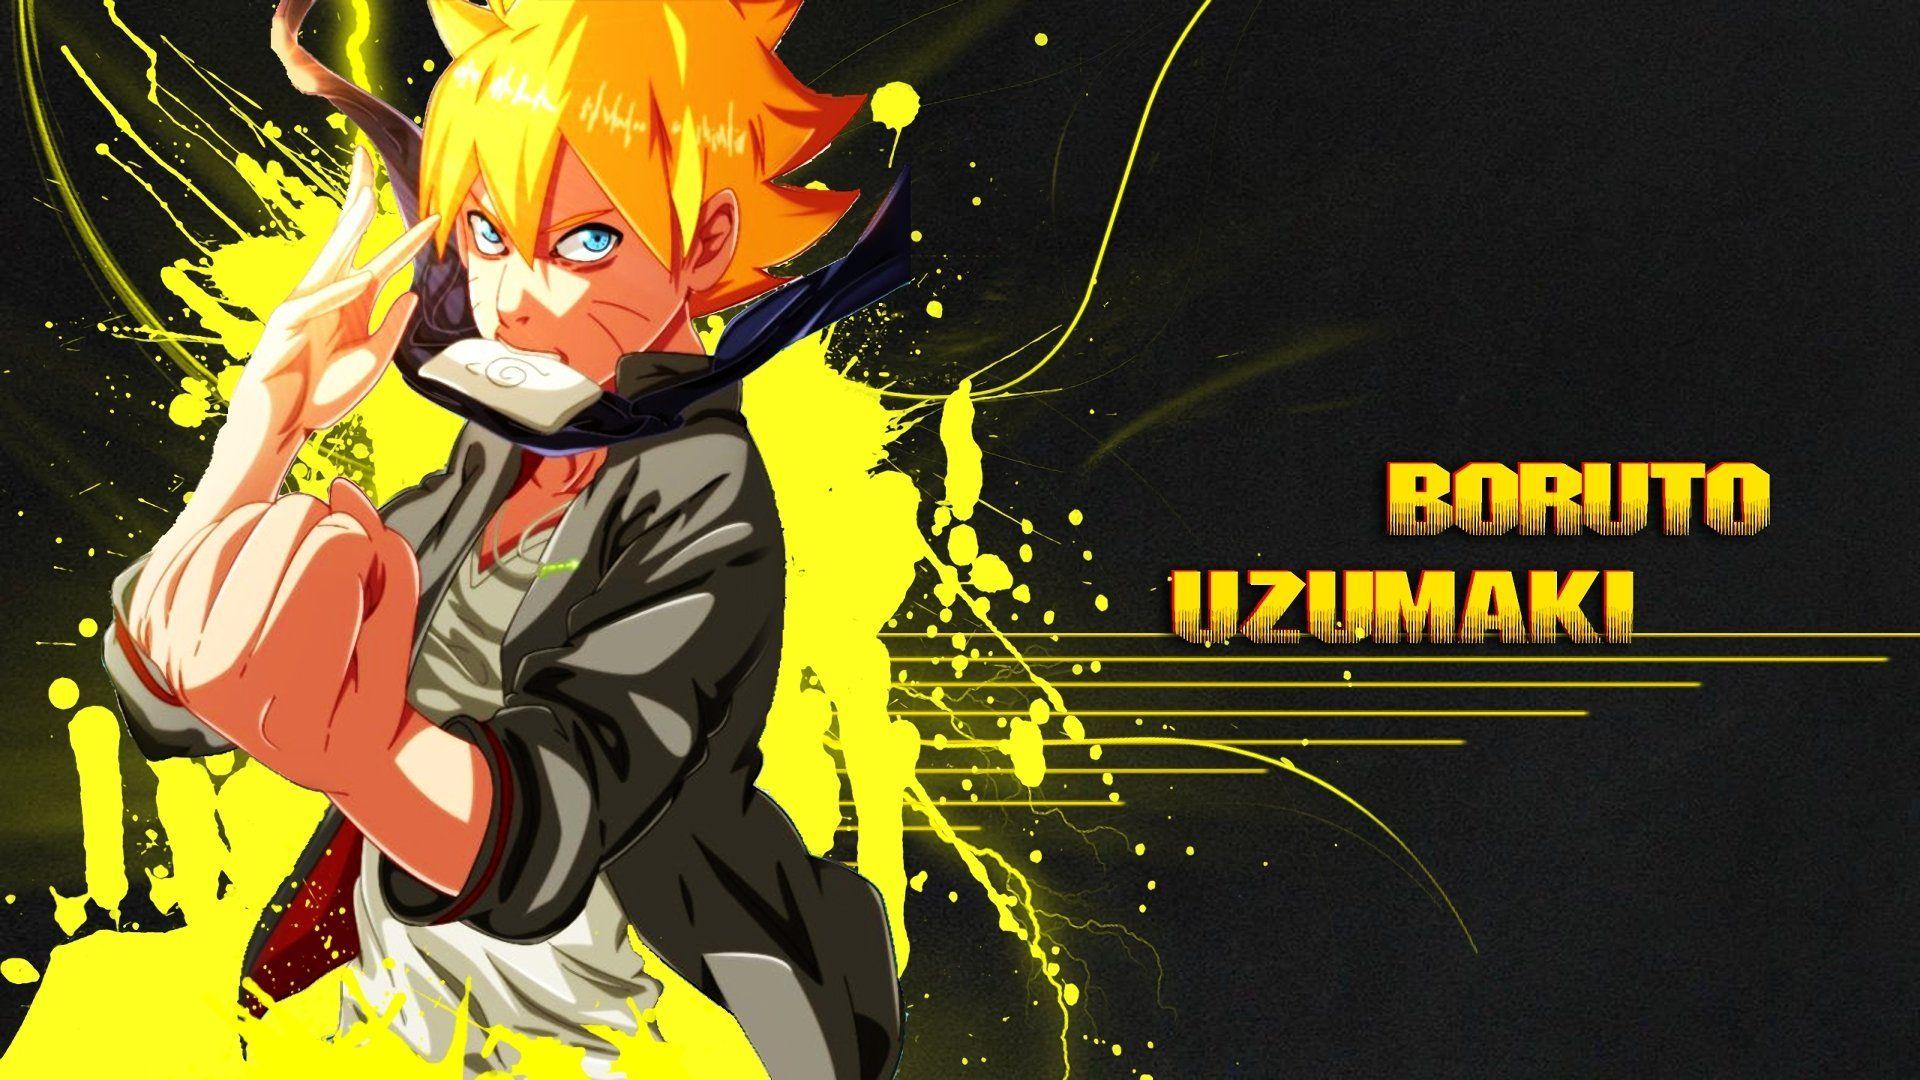 Best Wallpaper: Boruto Uzumaki Naruto Next Generations Wallpaper